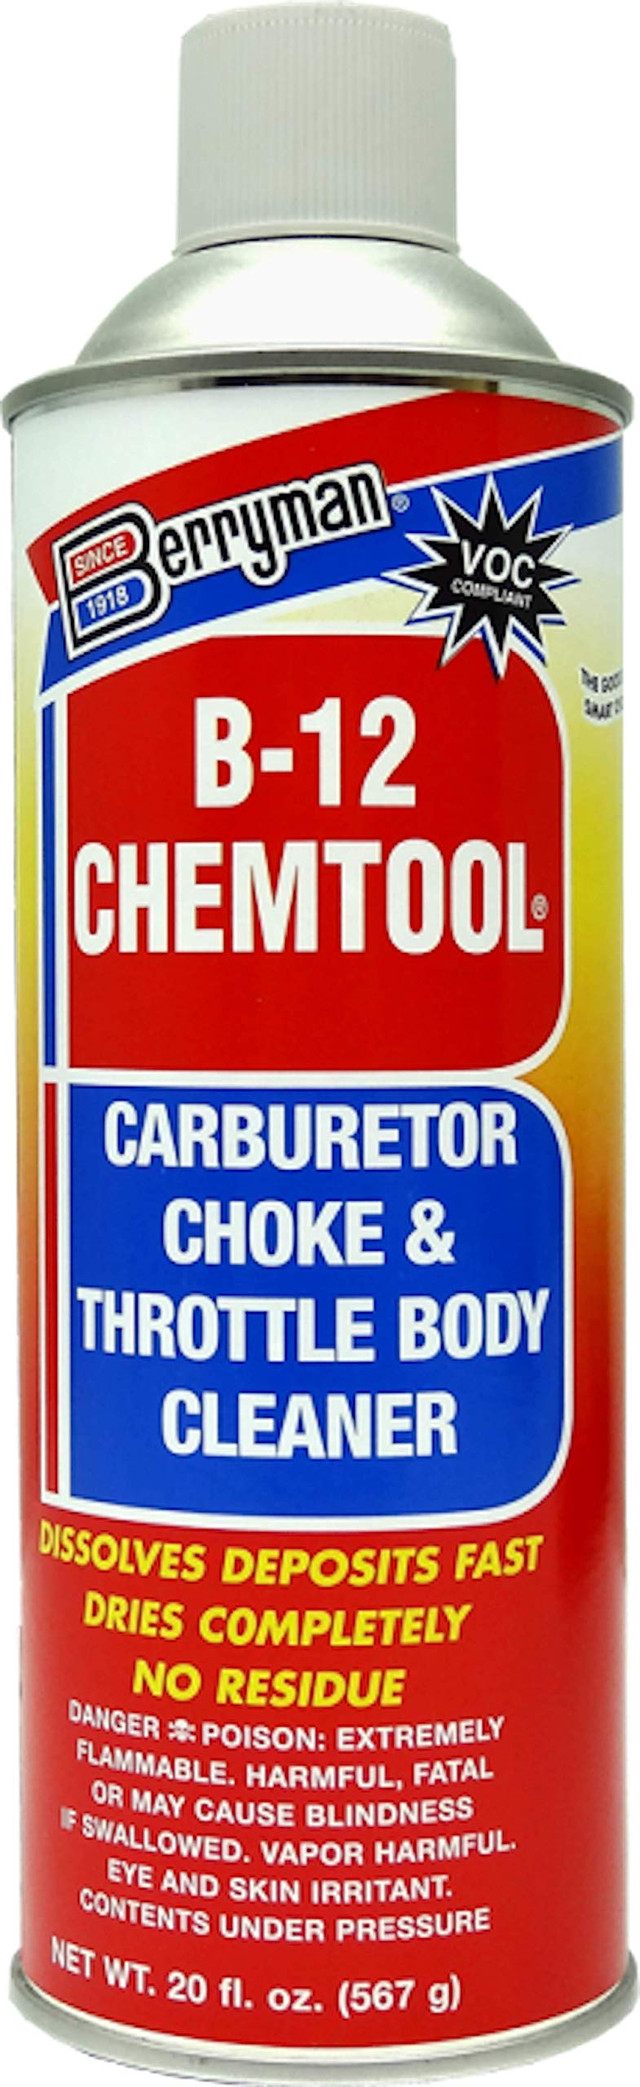 BERRYMAN B-12 CHEMTOOL CARBURETOR CLEANER - CA (0120C)